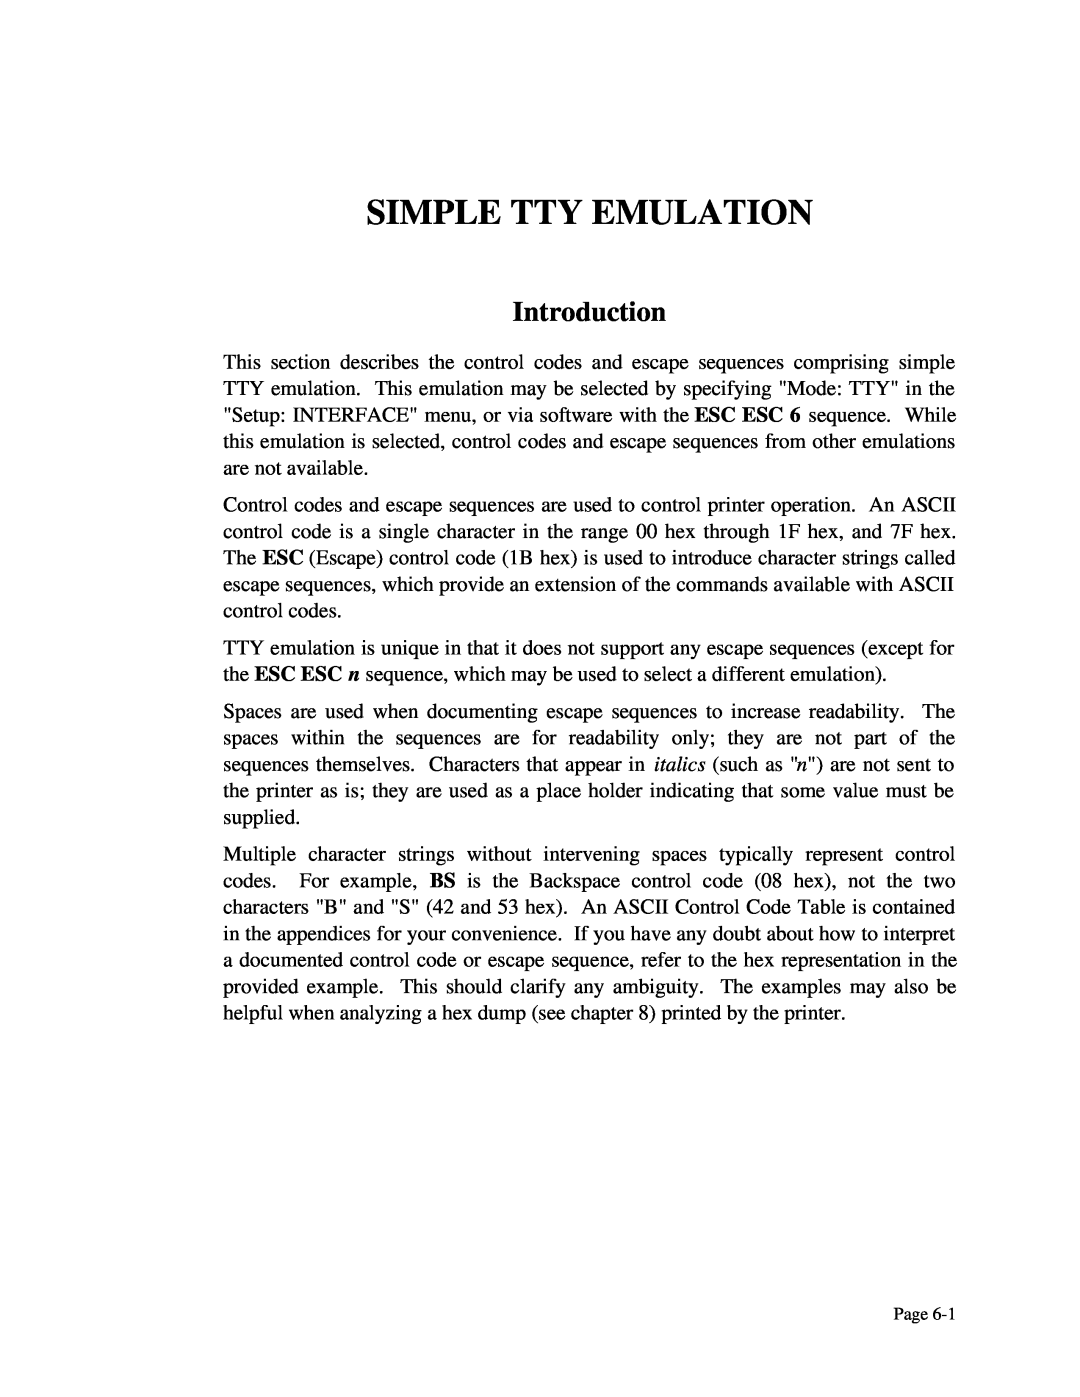 Printek 4500, 4503, 4300 manual Simple Tty Emulation, Introduction 